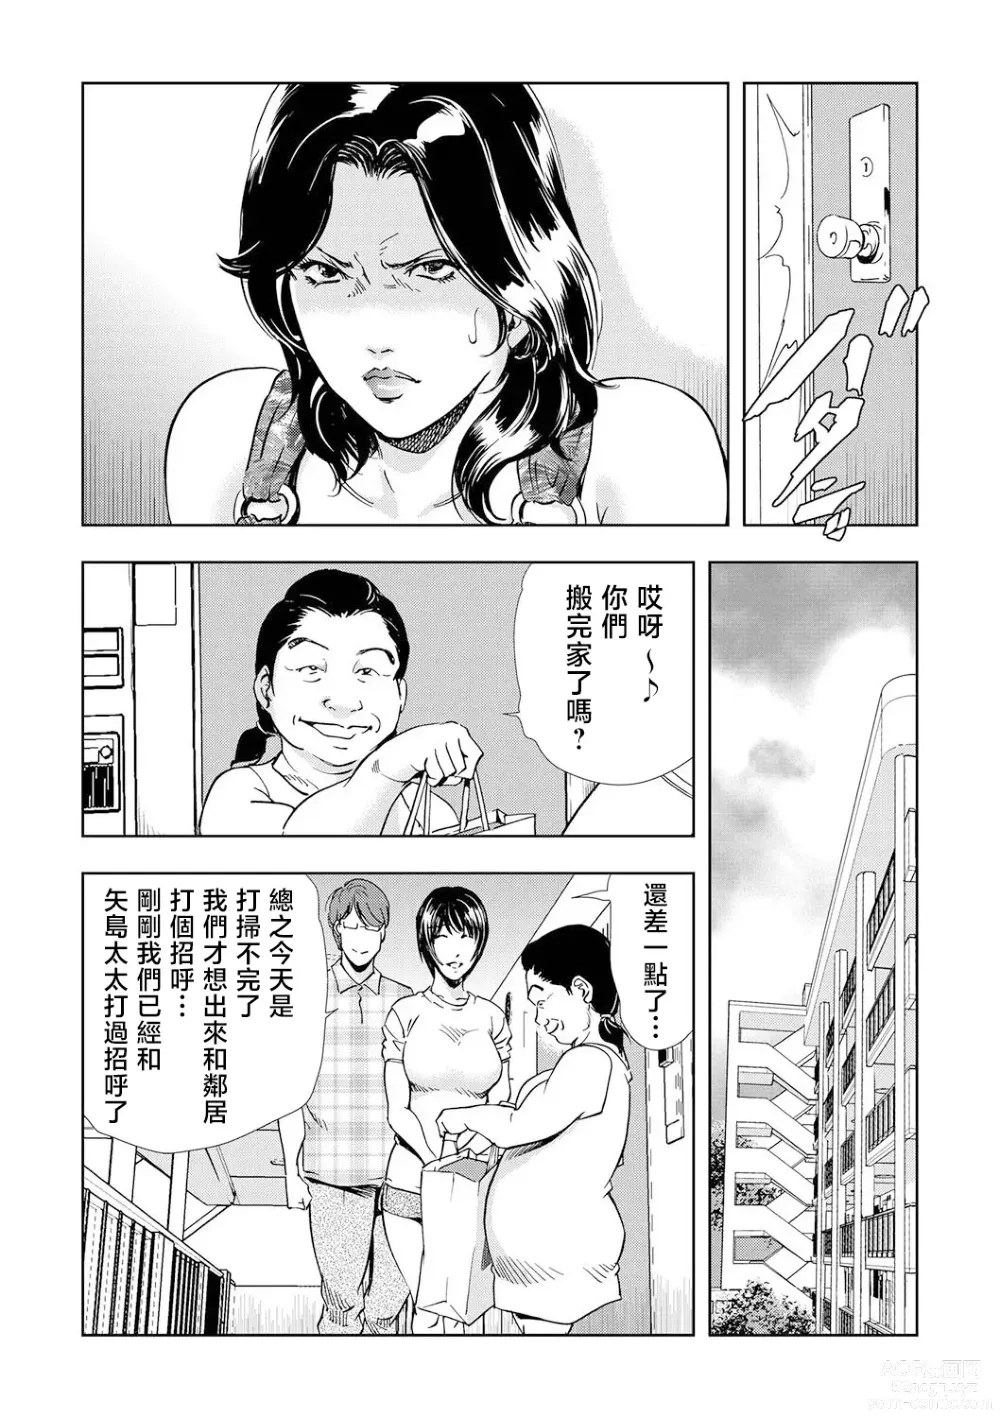 Page 8 of manga Netorare Vol.04